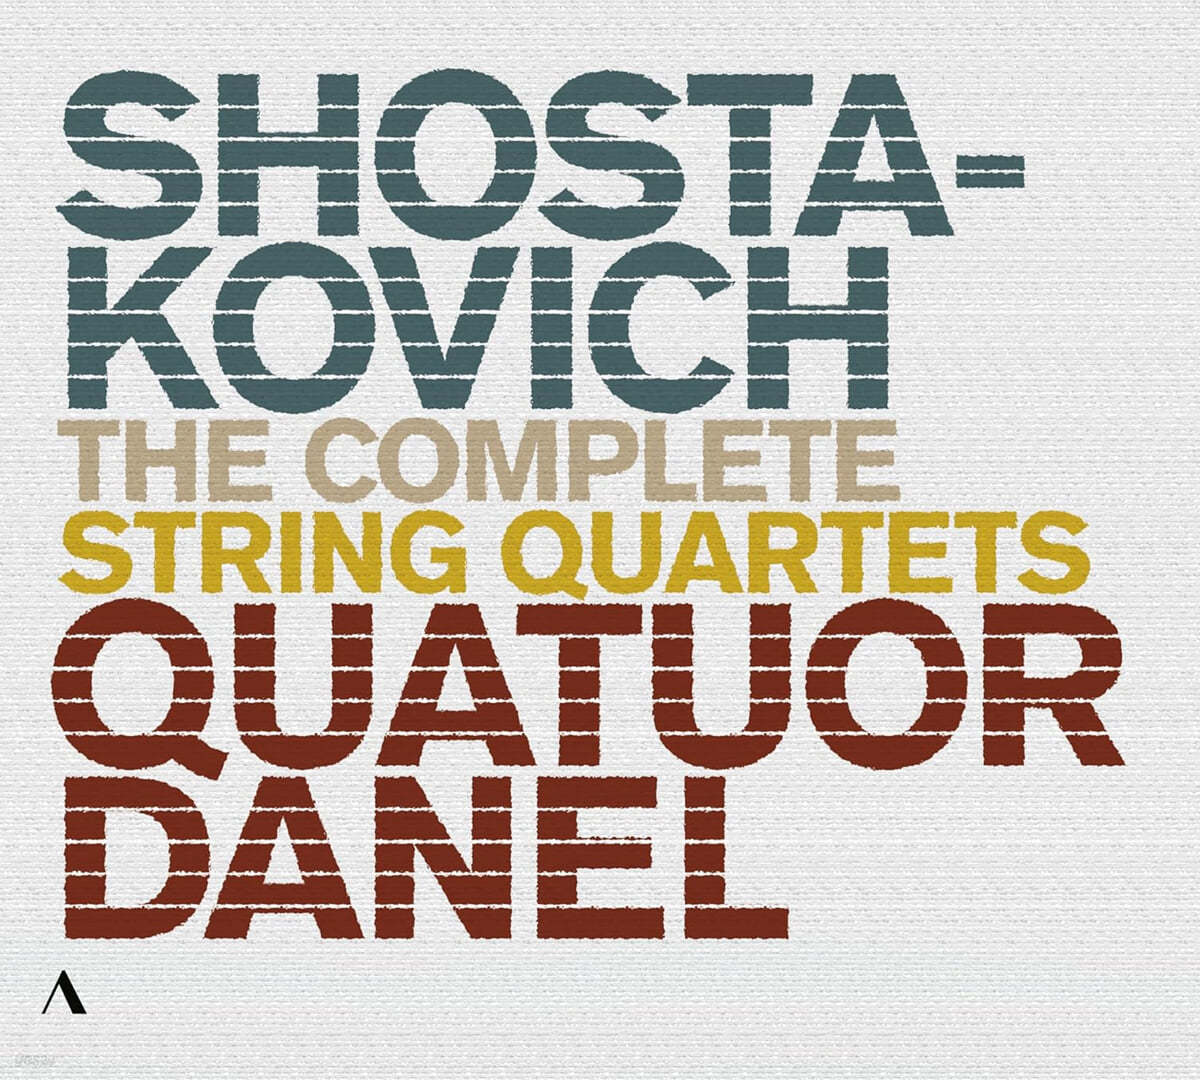 Quatuor Danel 쇼스타코비치: 현악 사중주 전곡 (Shostakovich: The Complete String Quartets)